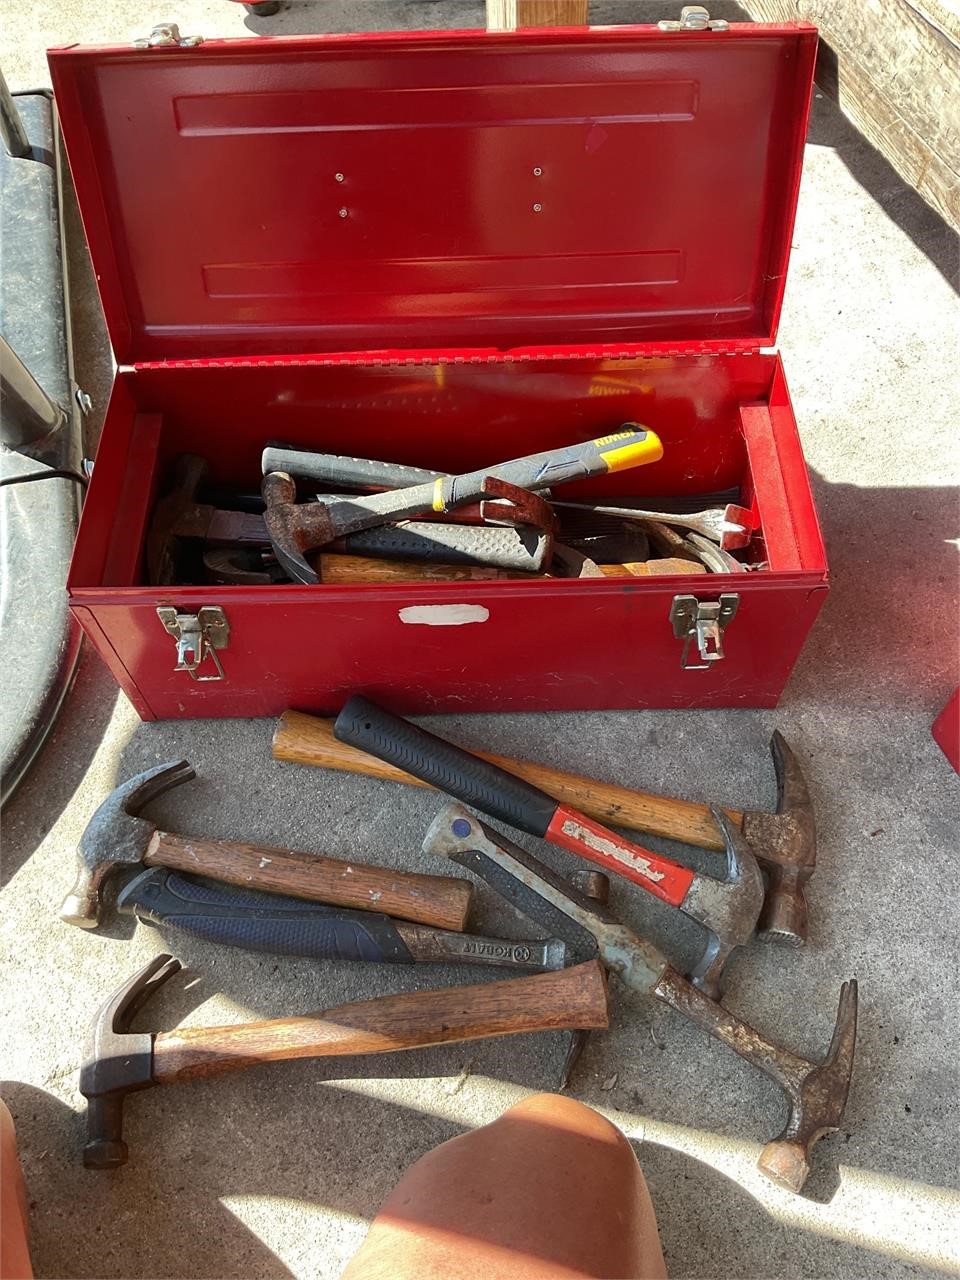 Tool box full of hammers